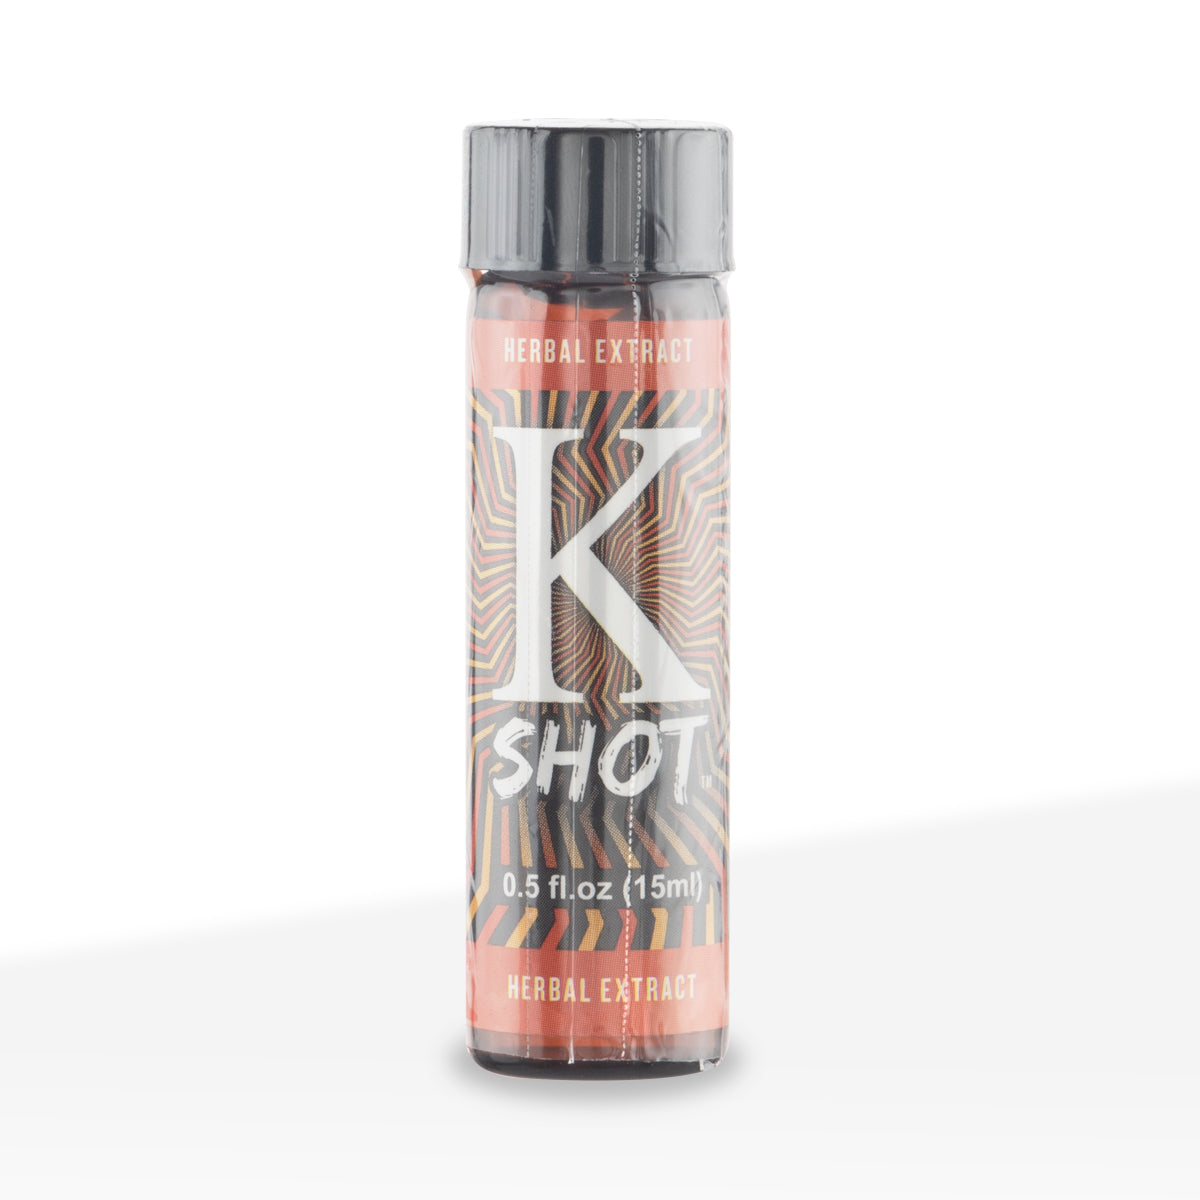 Kratom | K Shot 15ml Liquid Extract |  650mg - 0.5oz - 12 Count